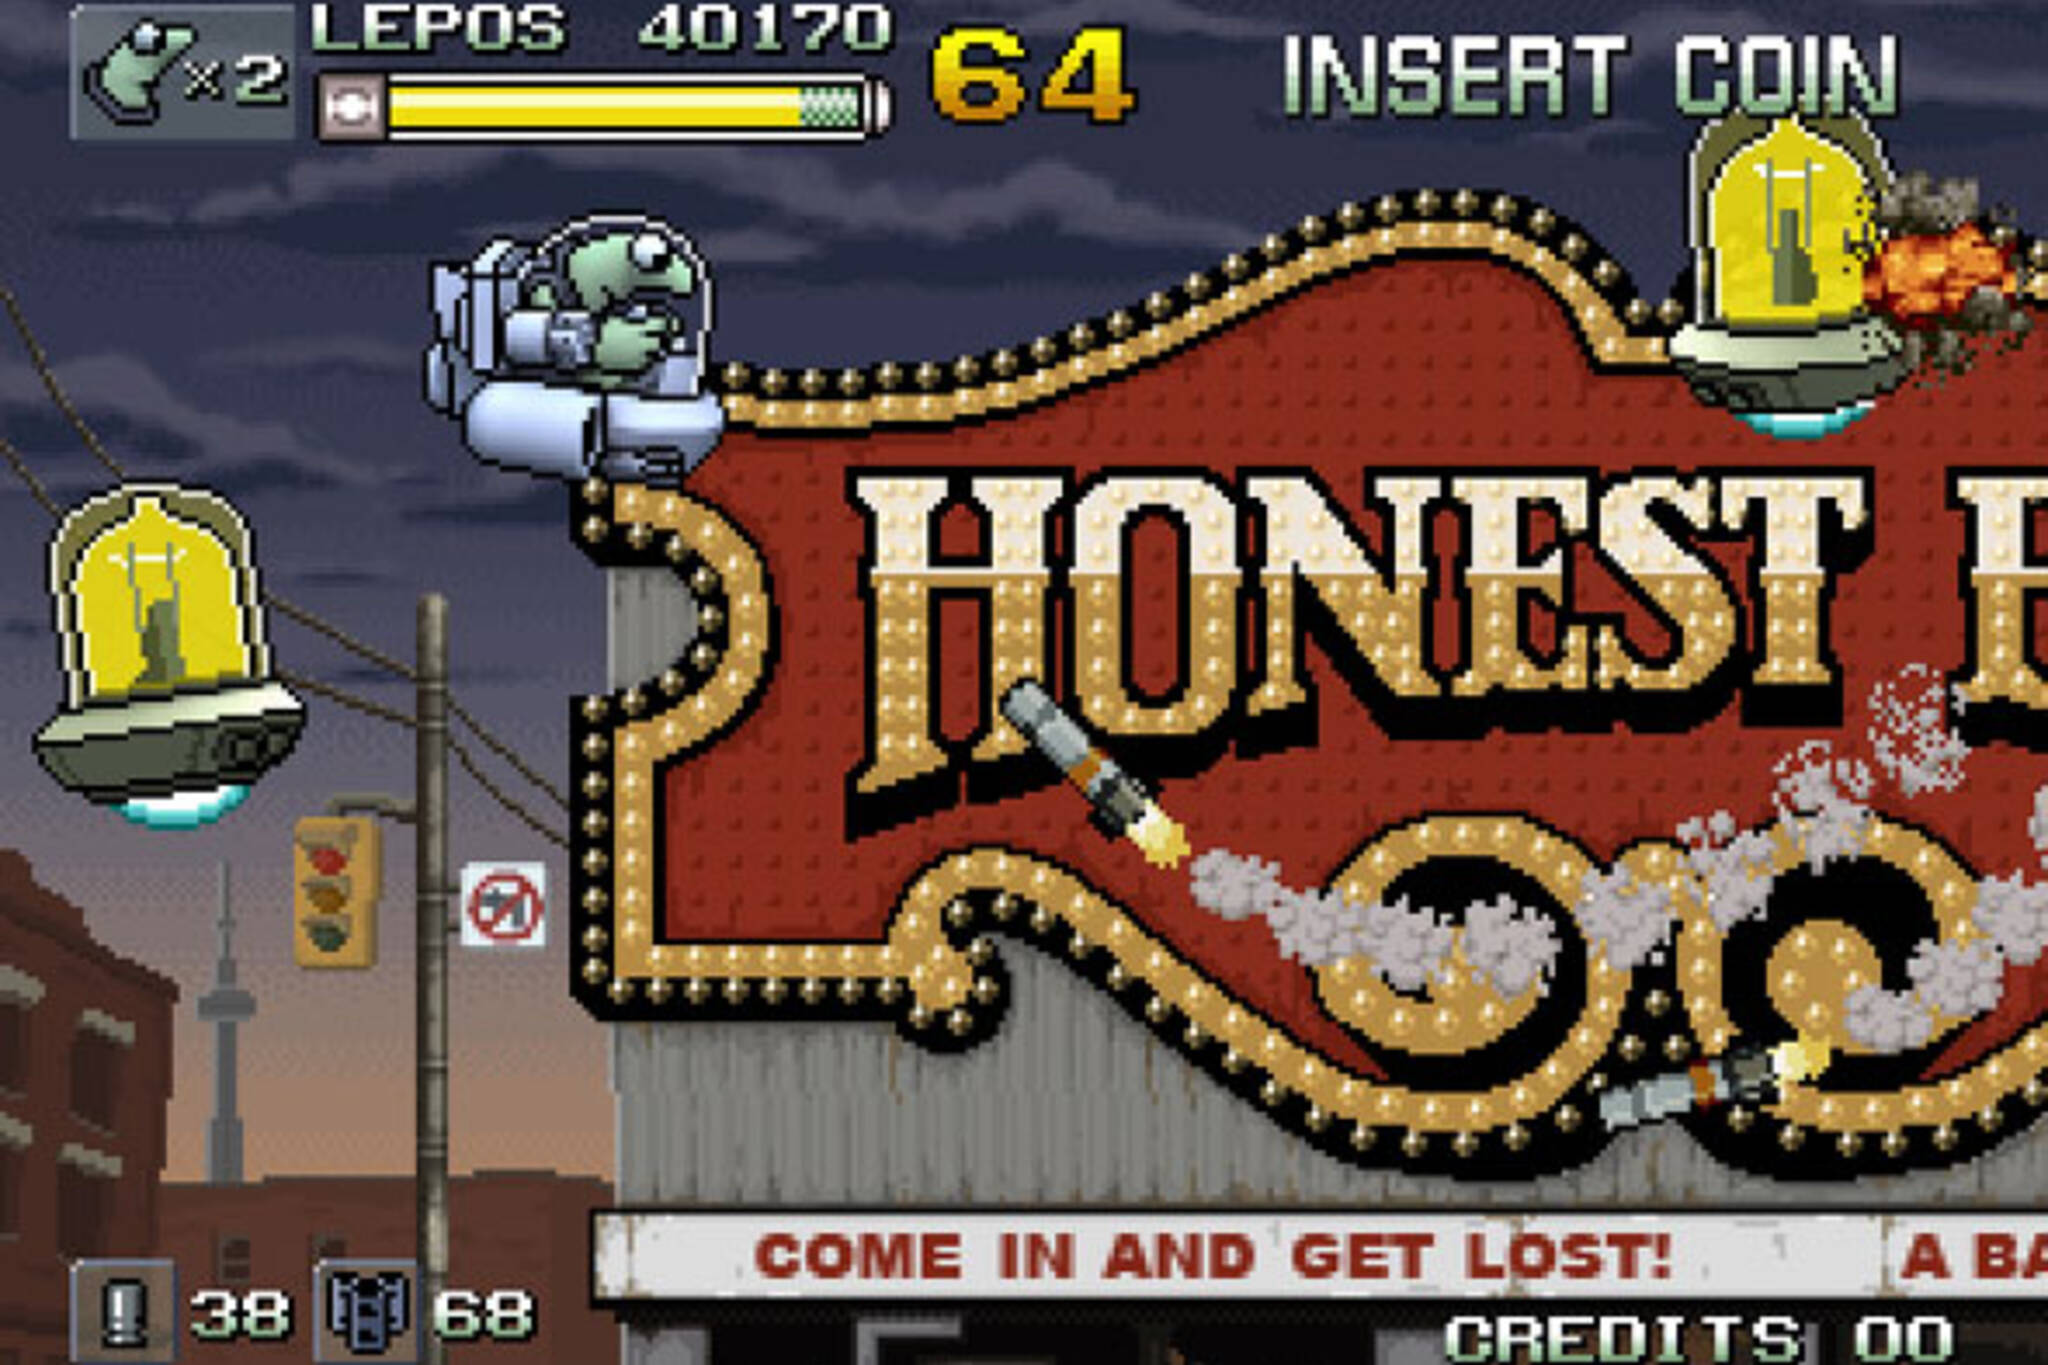 Honest Ed's video game